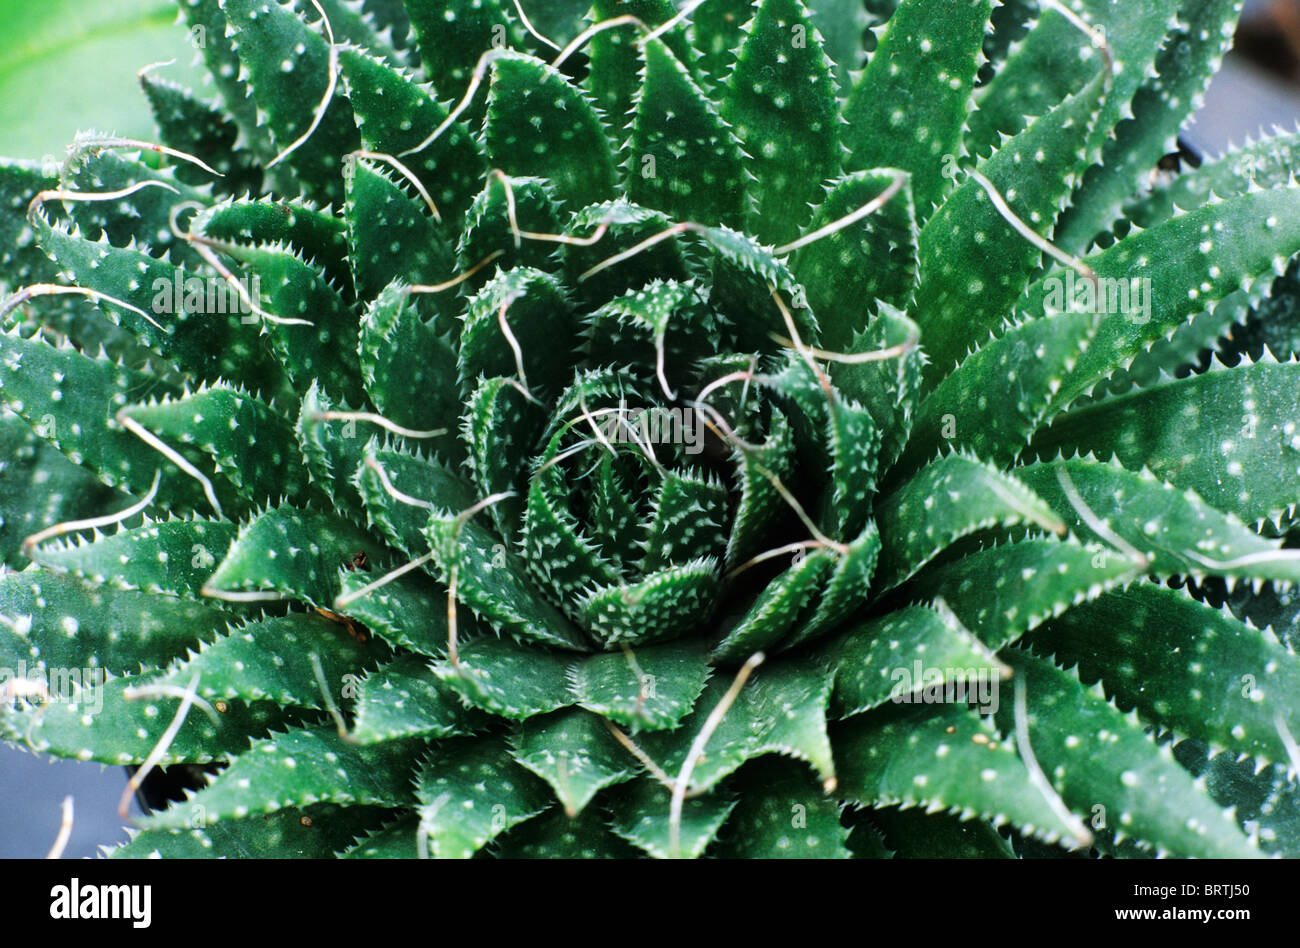 Aloe aristata, Lace aloe, Torch plant succulent cactus cacti garden plant plants aloes Stock Photo